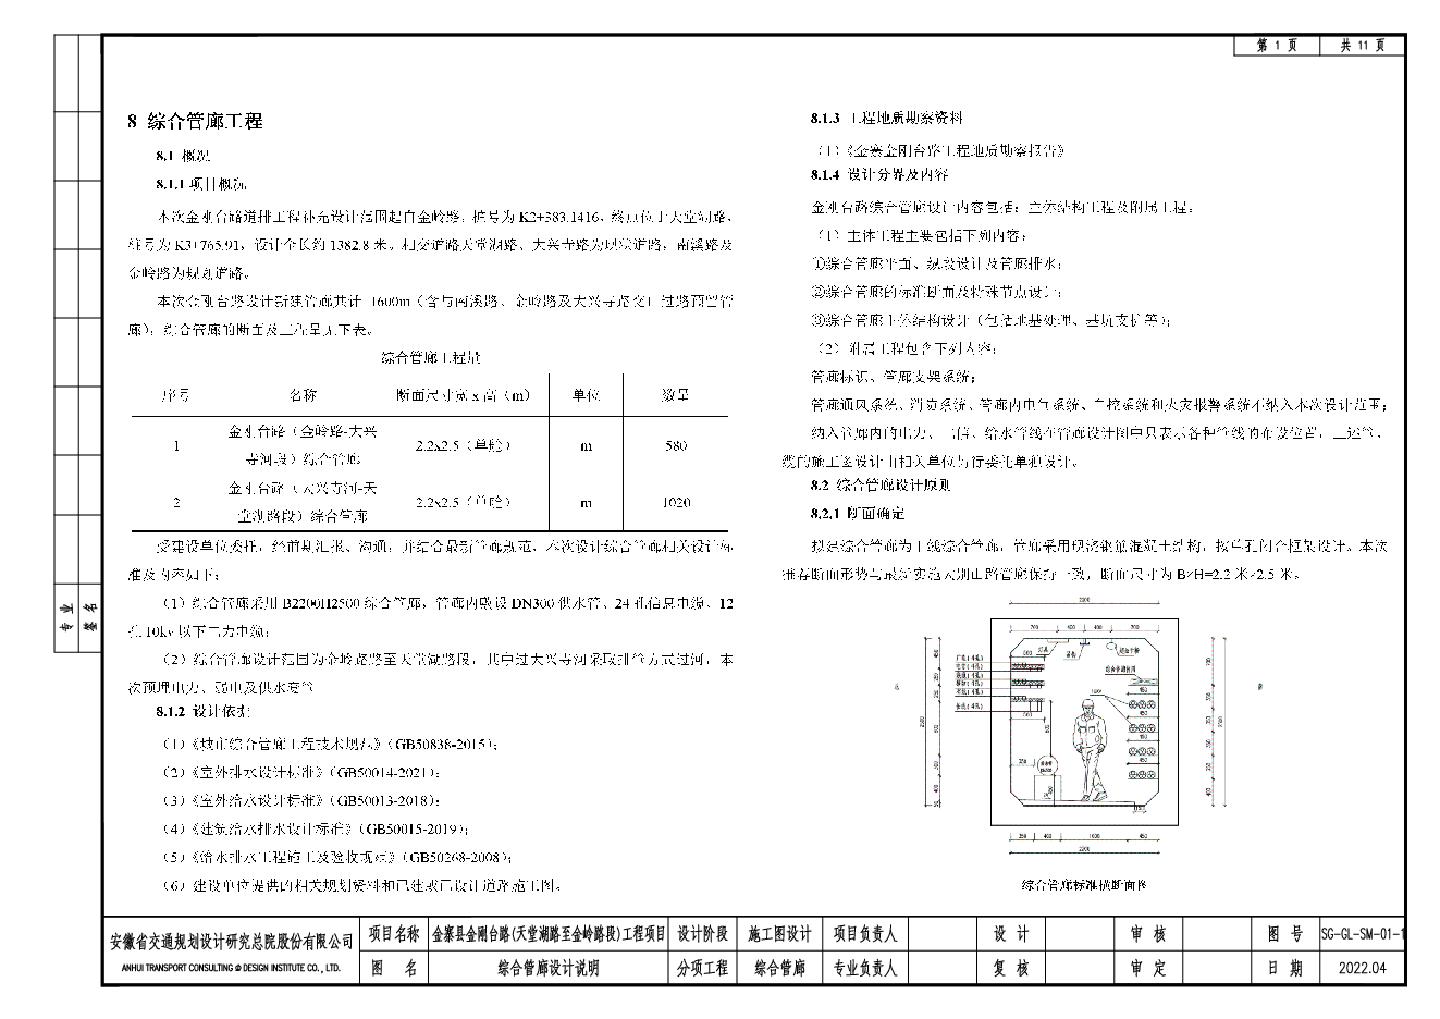 SG-GL-SM-01综合管廊设计说明.dwg